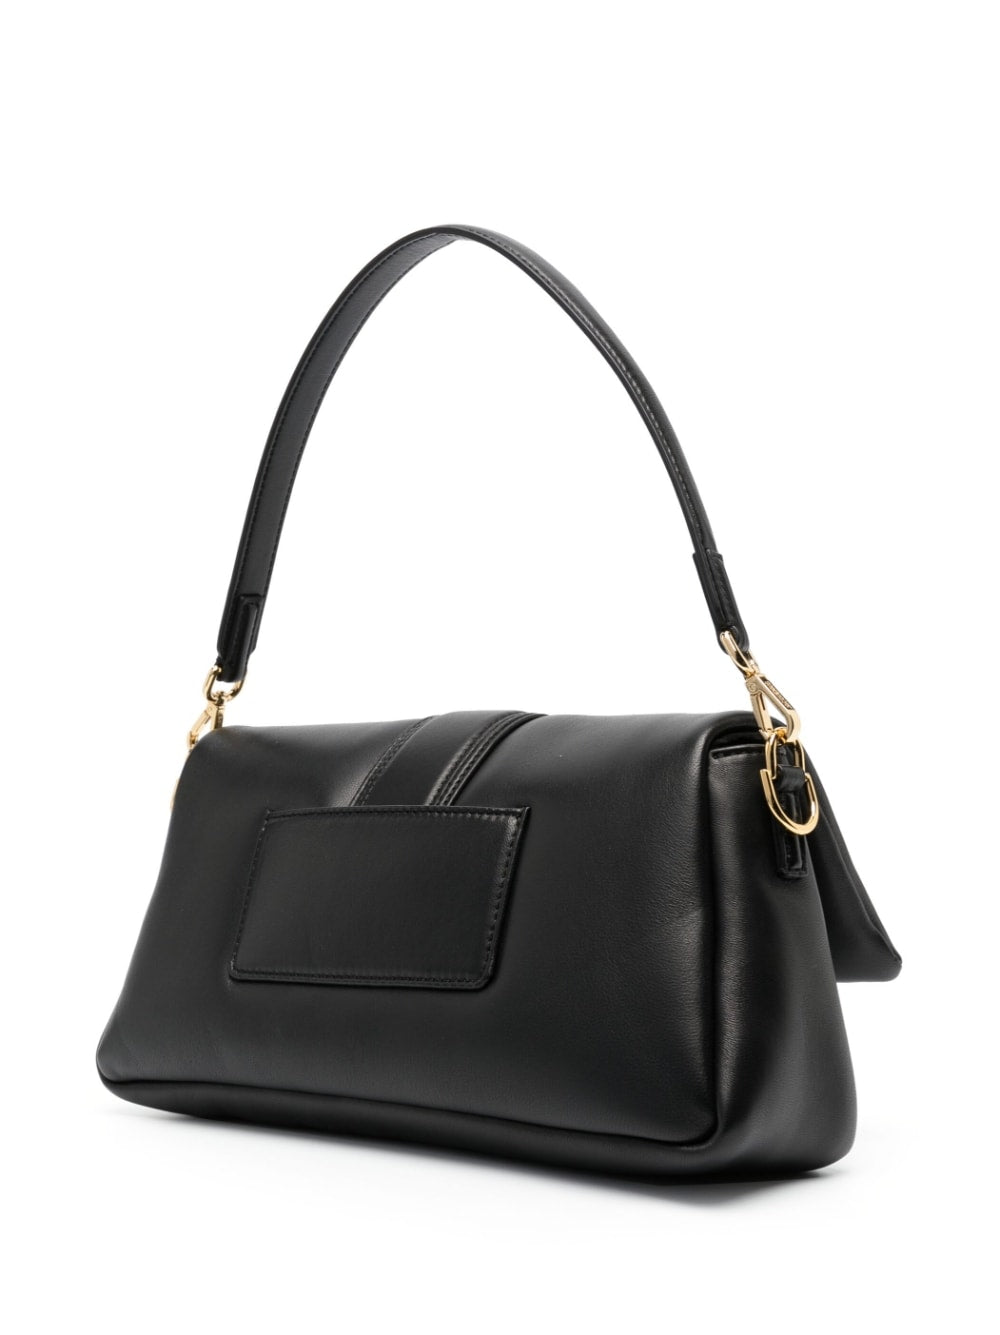 JACQUEMUS Black Luxurious Lamb Leather Handbag for Stylish Women